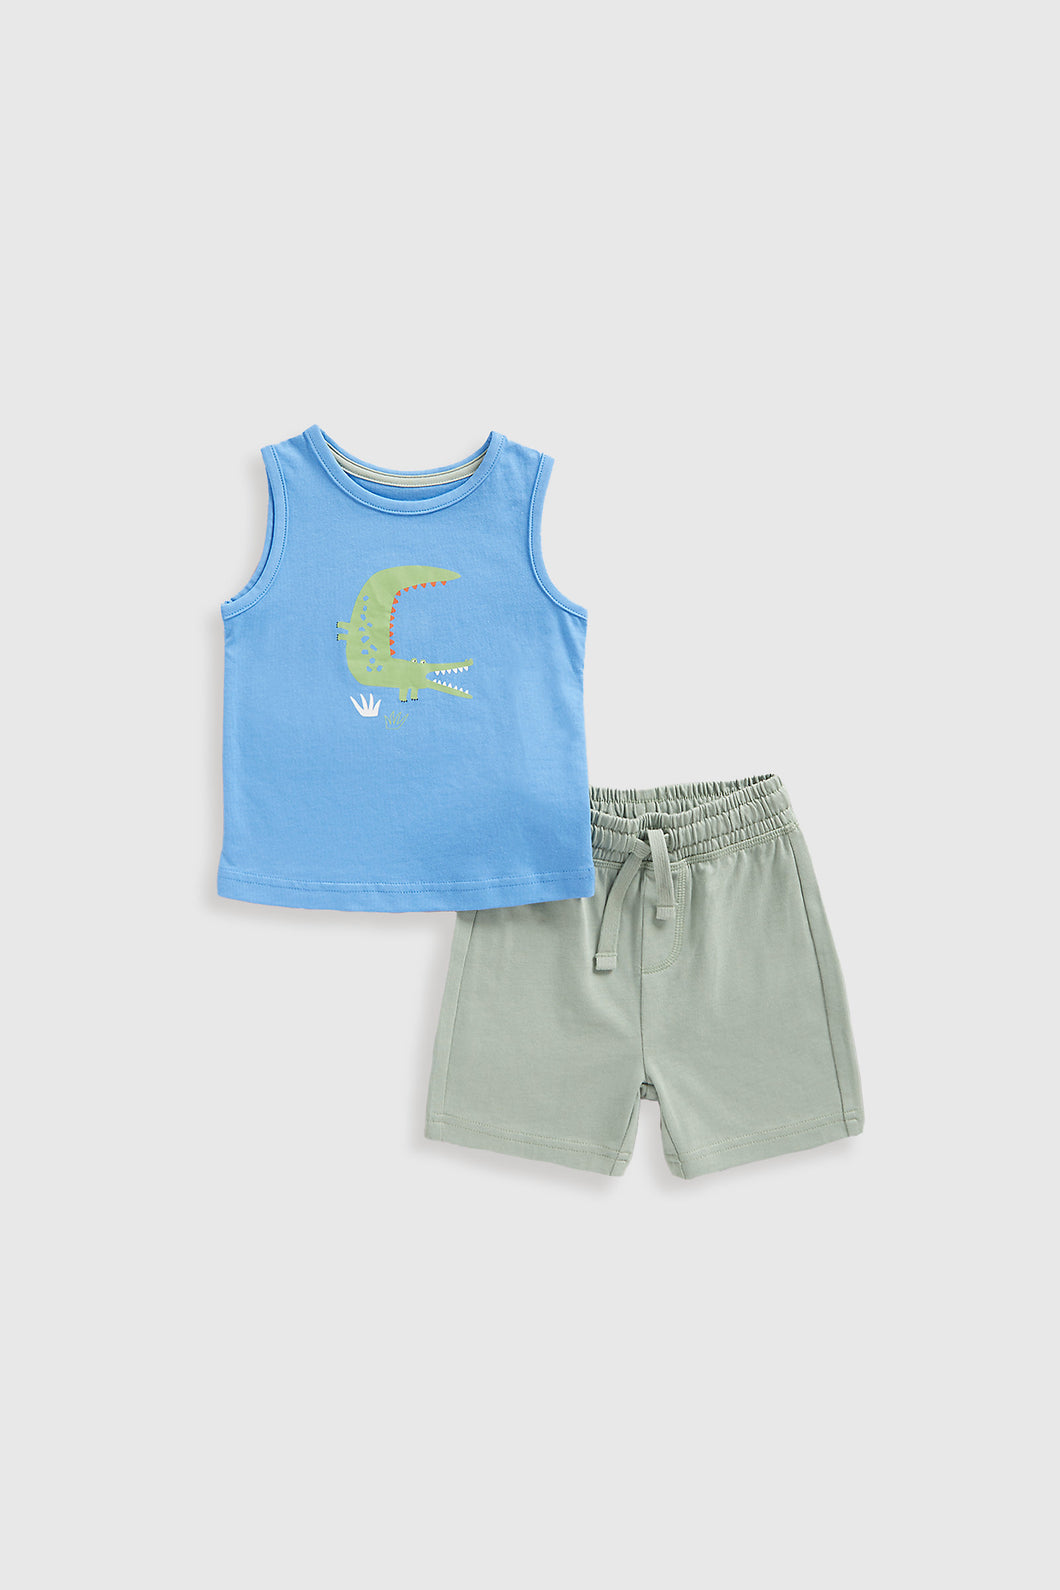 Mothercare Crocodile Vest T-Shirt And Shorts Set